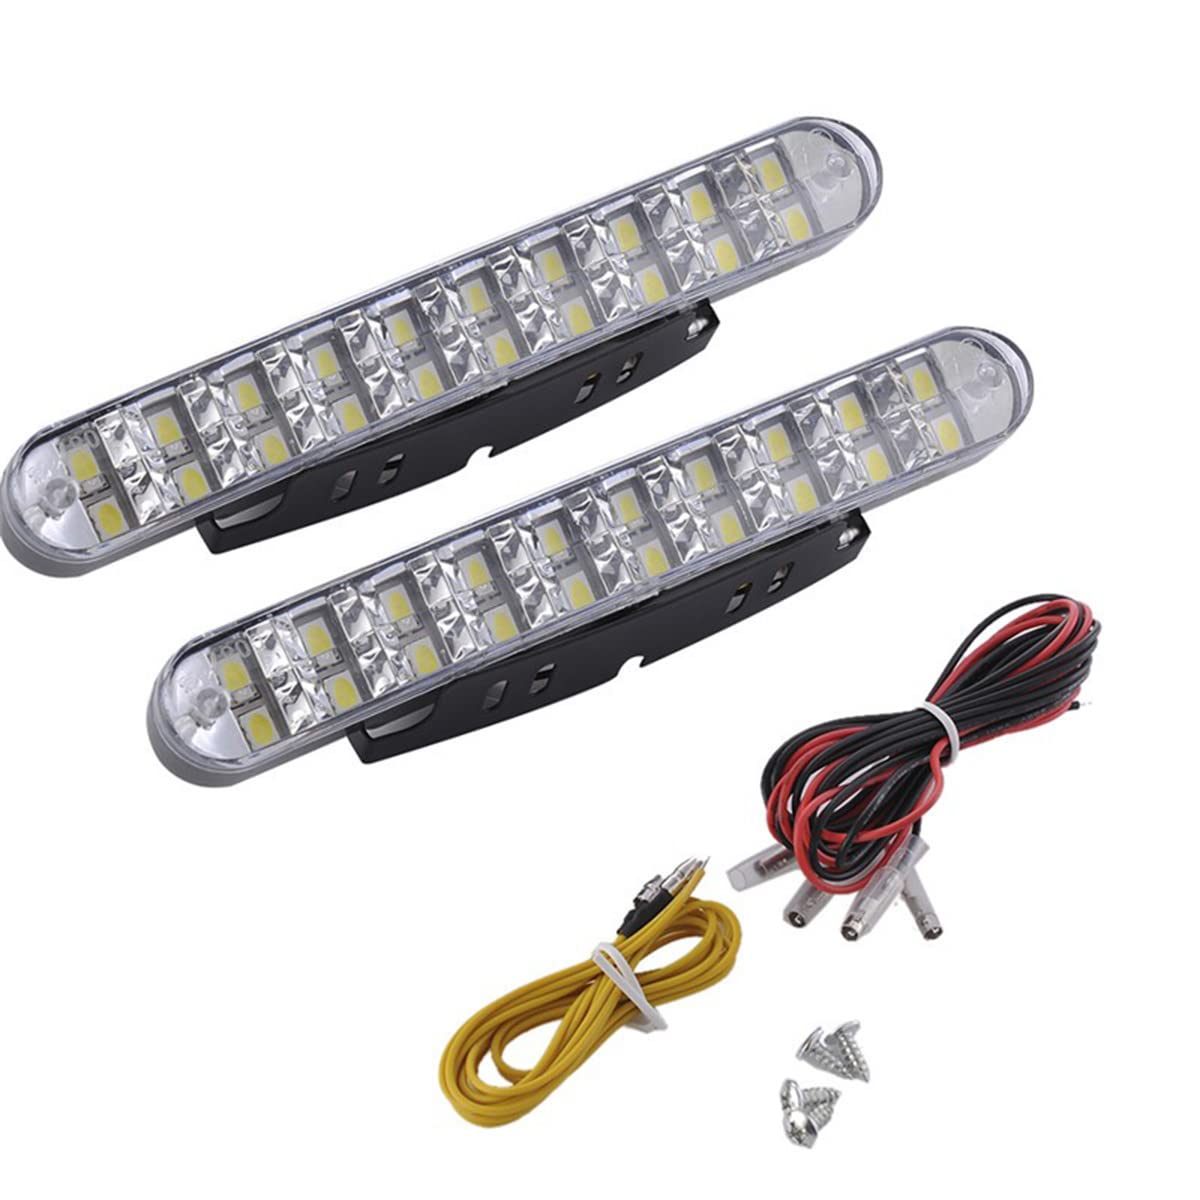 FOLGEMIR LED Tagfahrlicht, dimmbare Tagfahrleuchten, 2x 30 LEDs, DC 12V, Weiss/Gelb Blinker, E4 von FOLGEMIR